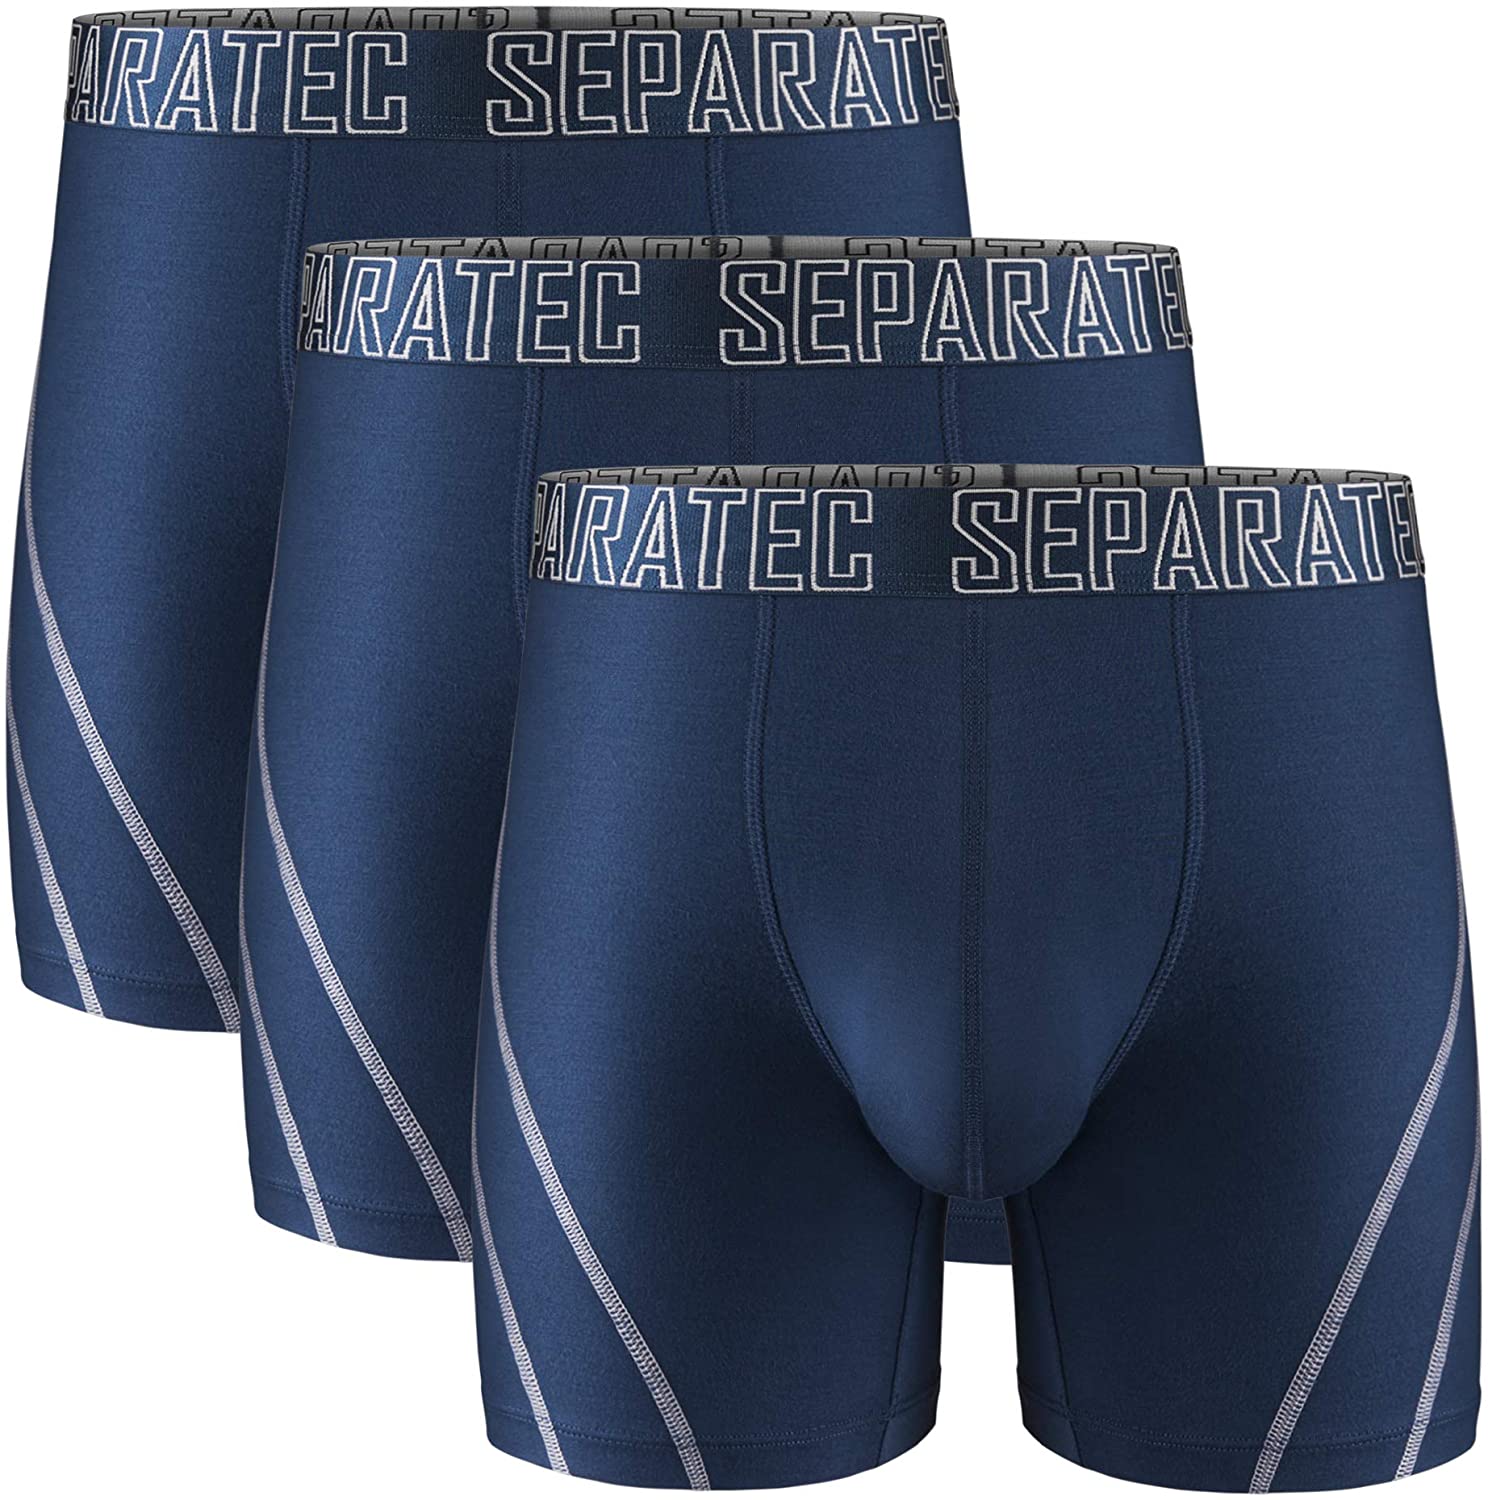 Separatec Bamboo Boxer Briefs: A Game-Changer in Men's Underwear -  Meninfluencer